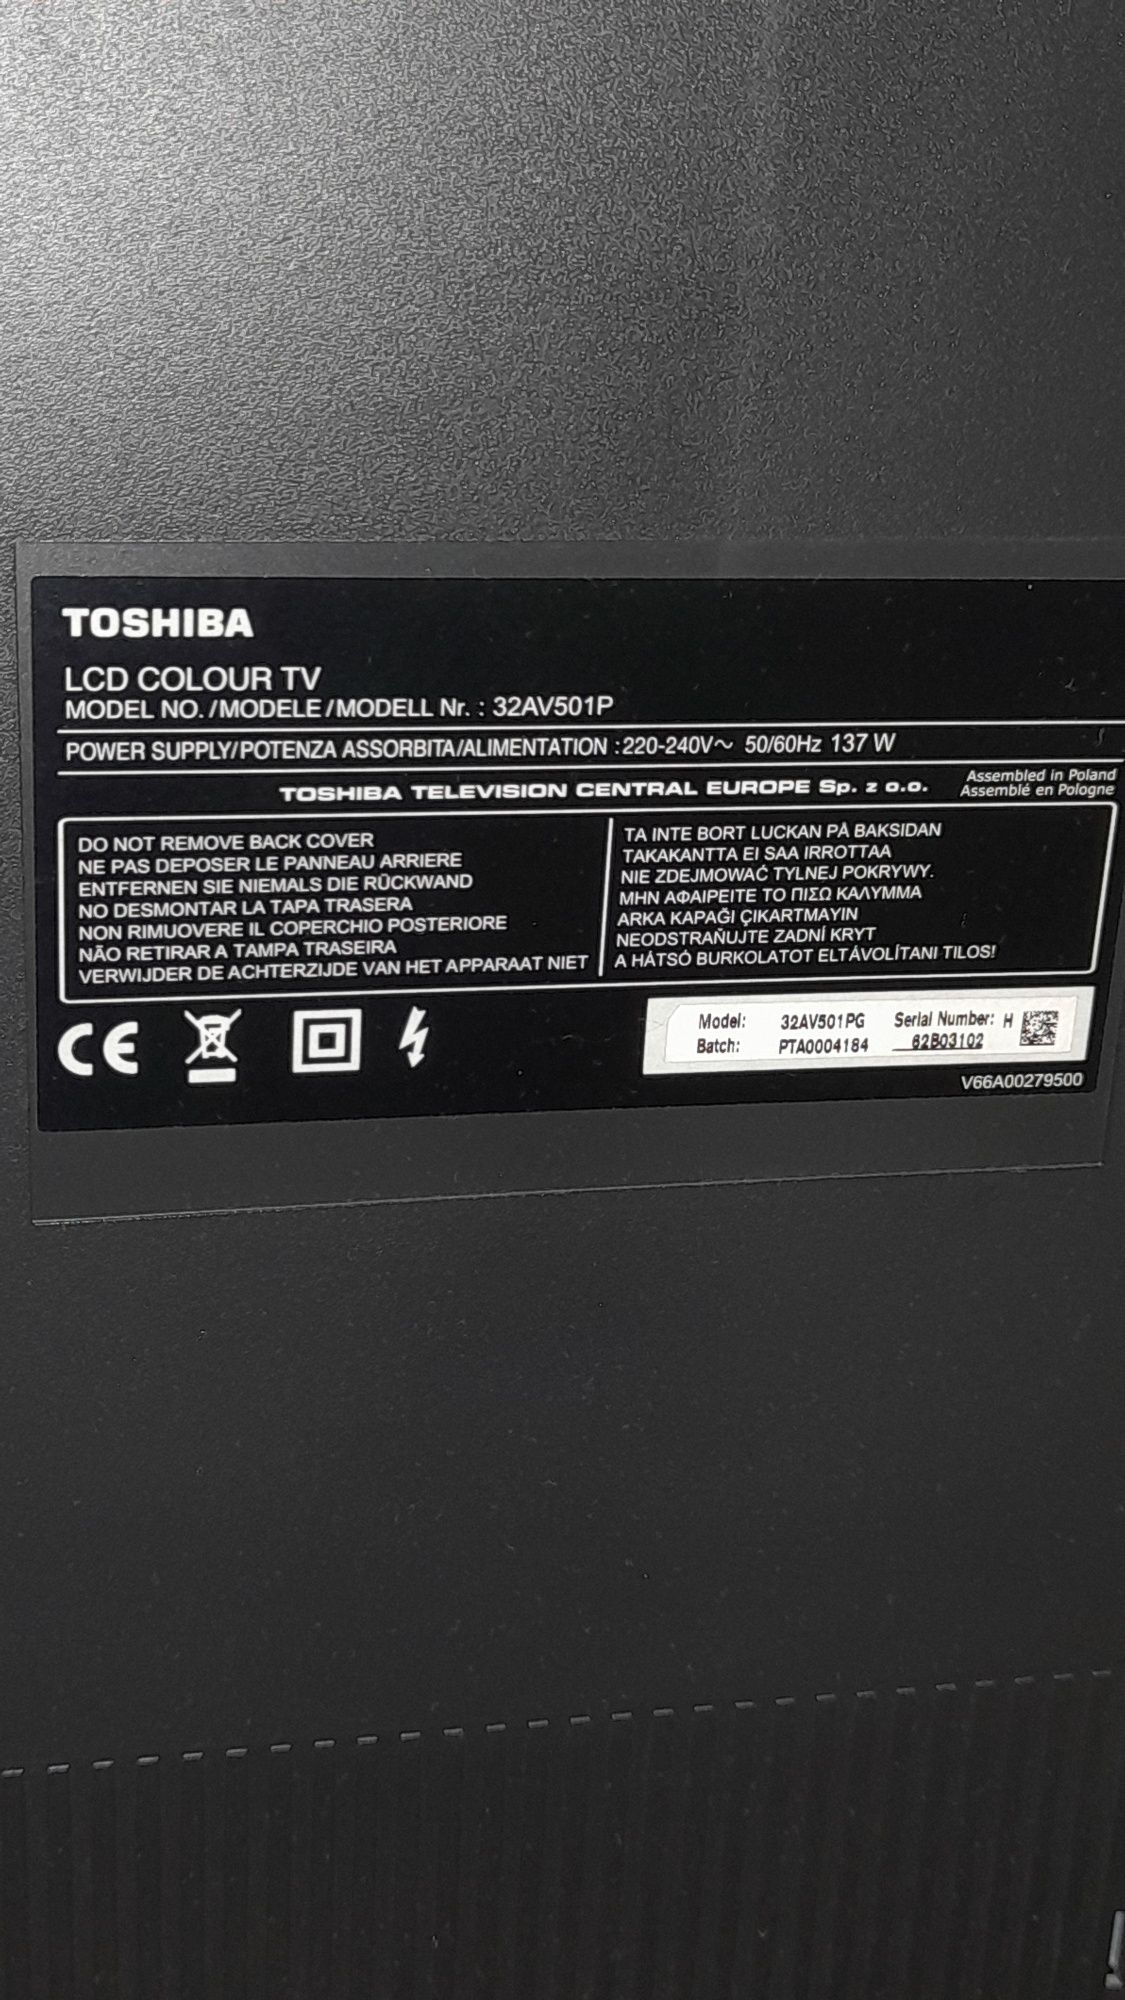 Toshiba LCD Colour TV